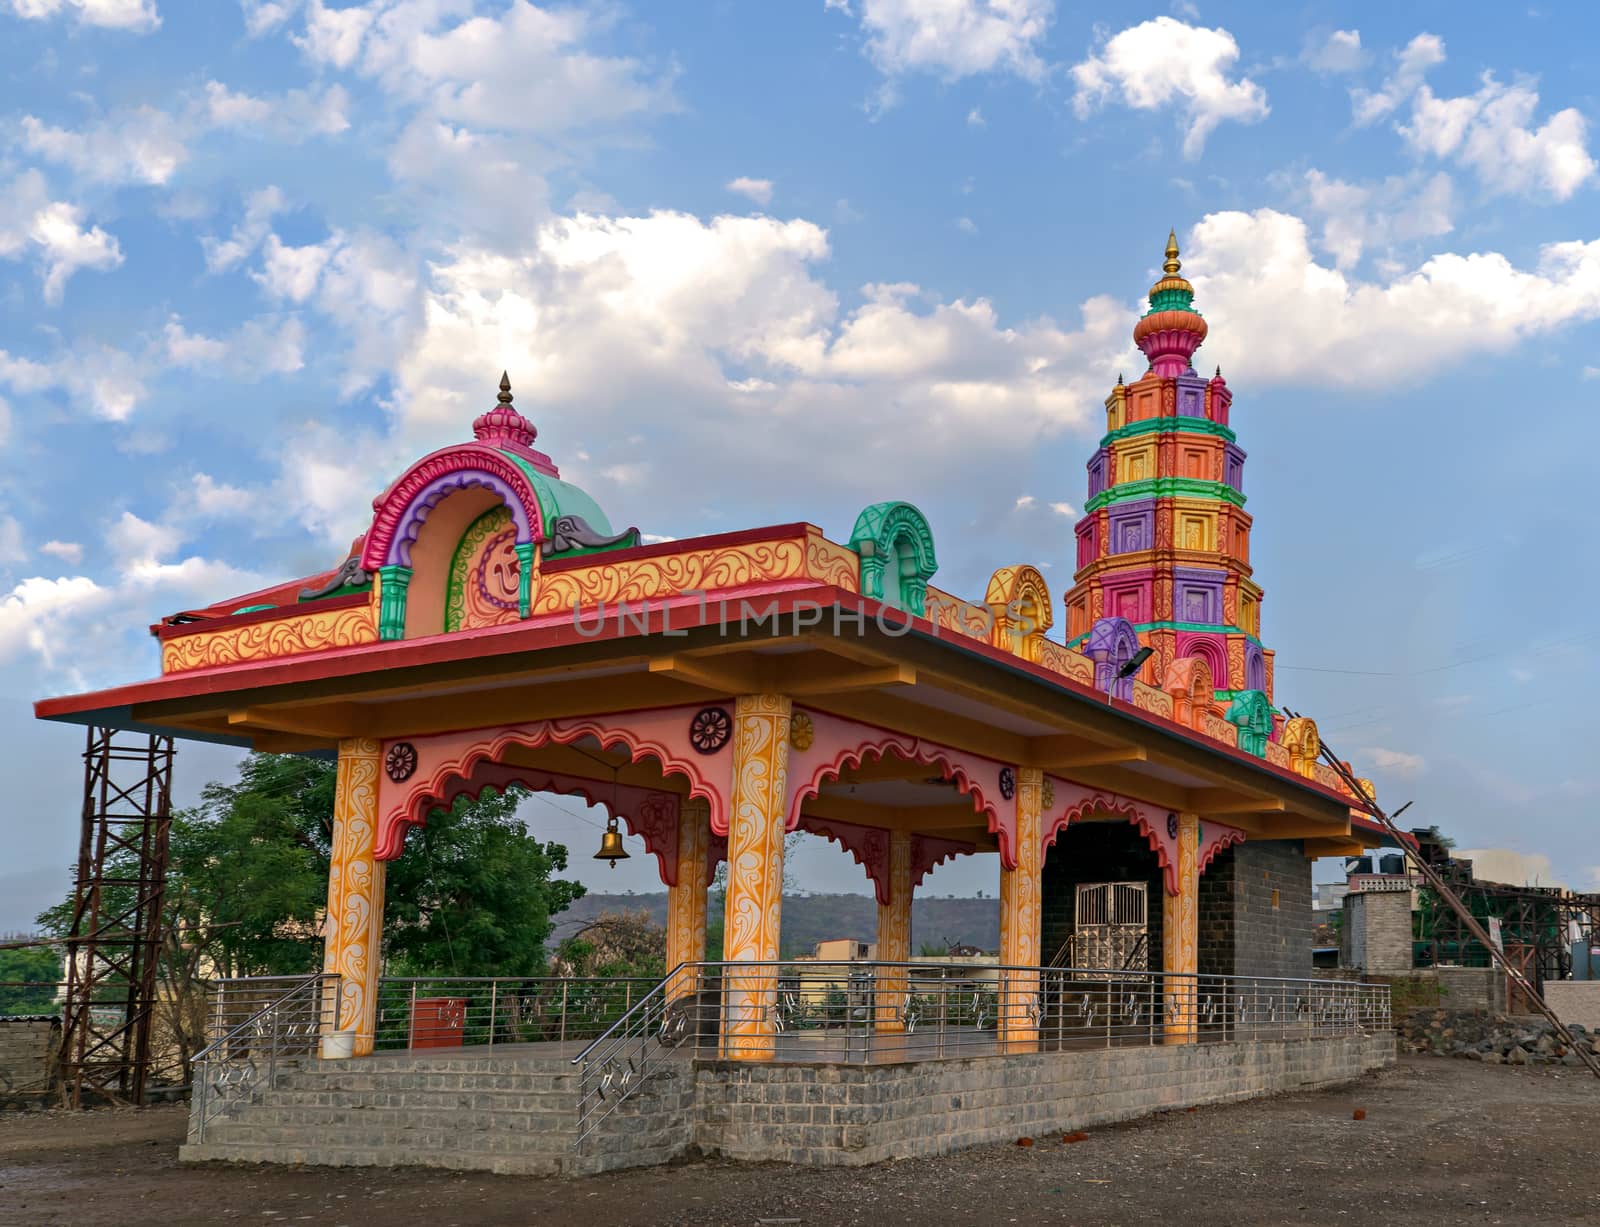 Colorful temple in Bavdhan village of Pune, Maharashtra, India